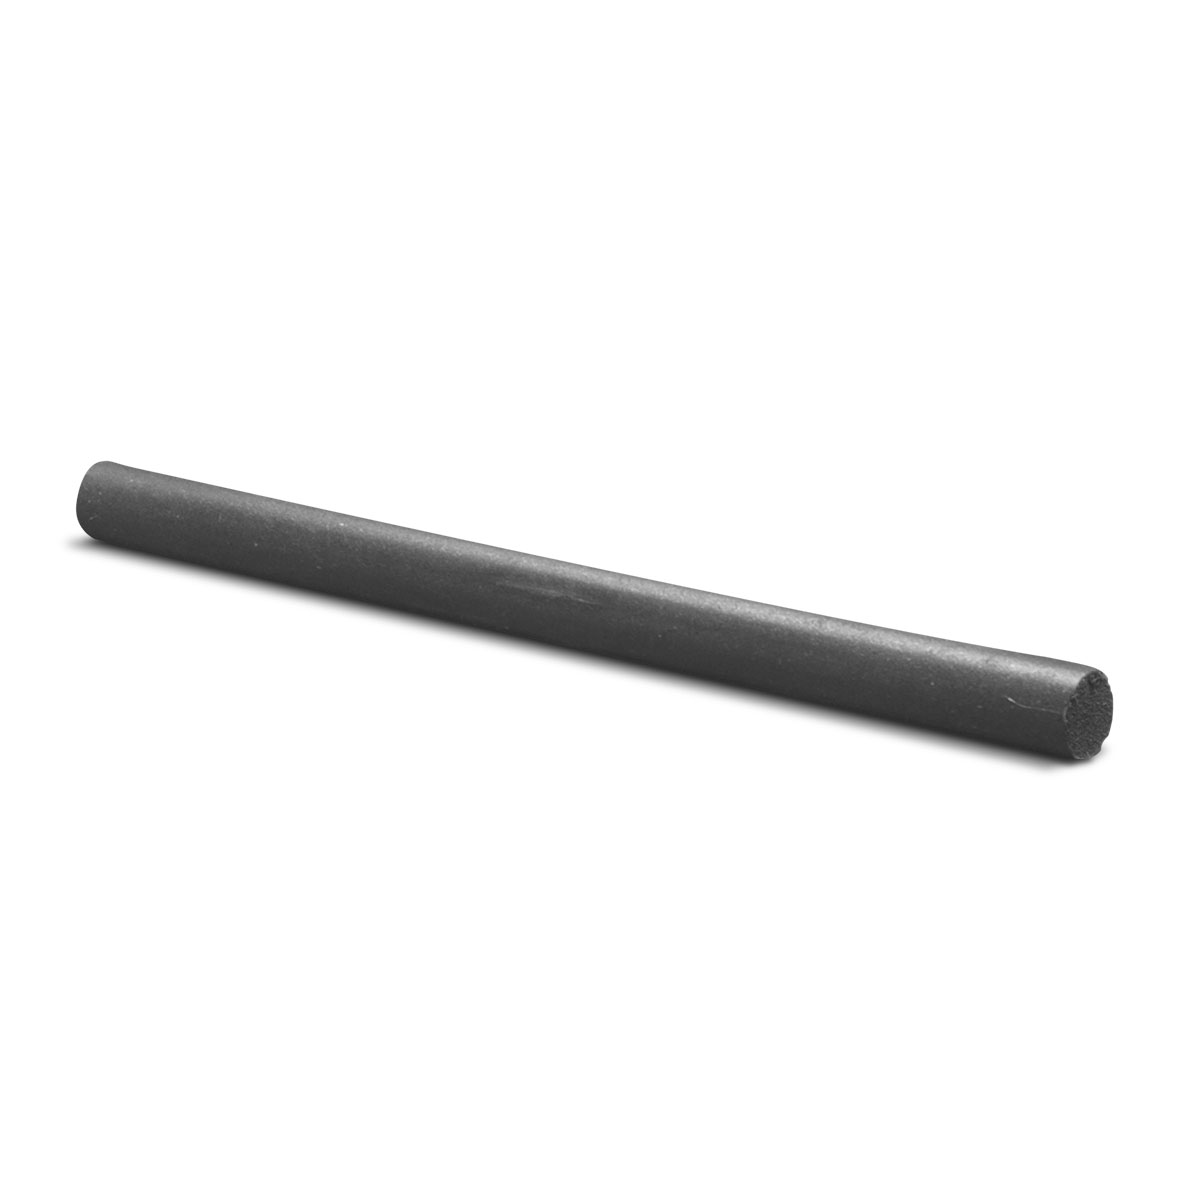 Cratex grinding stick, Ø 12,5 x 150 mm, Grain size 240, Round, Gray